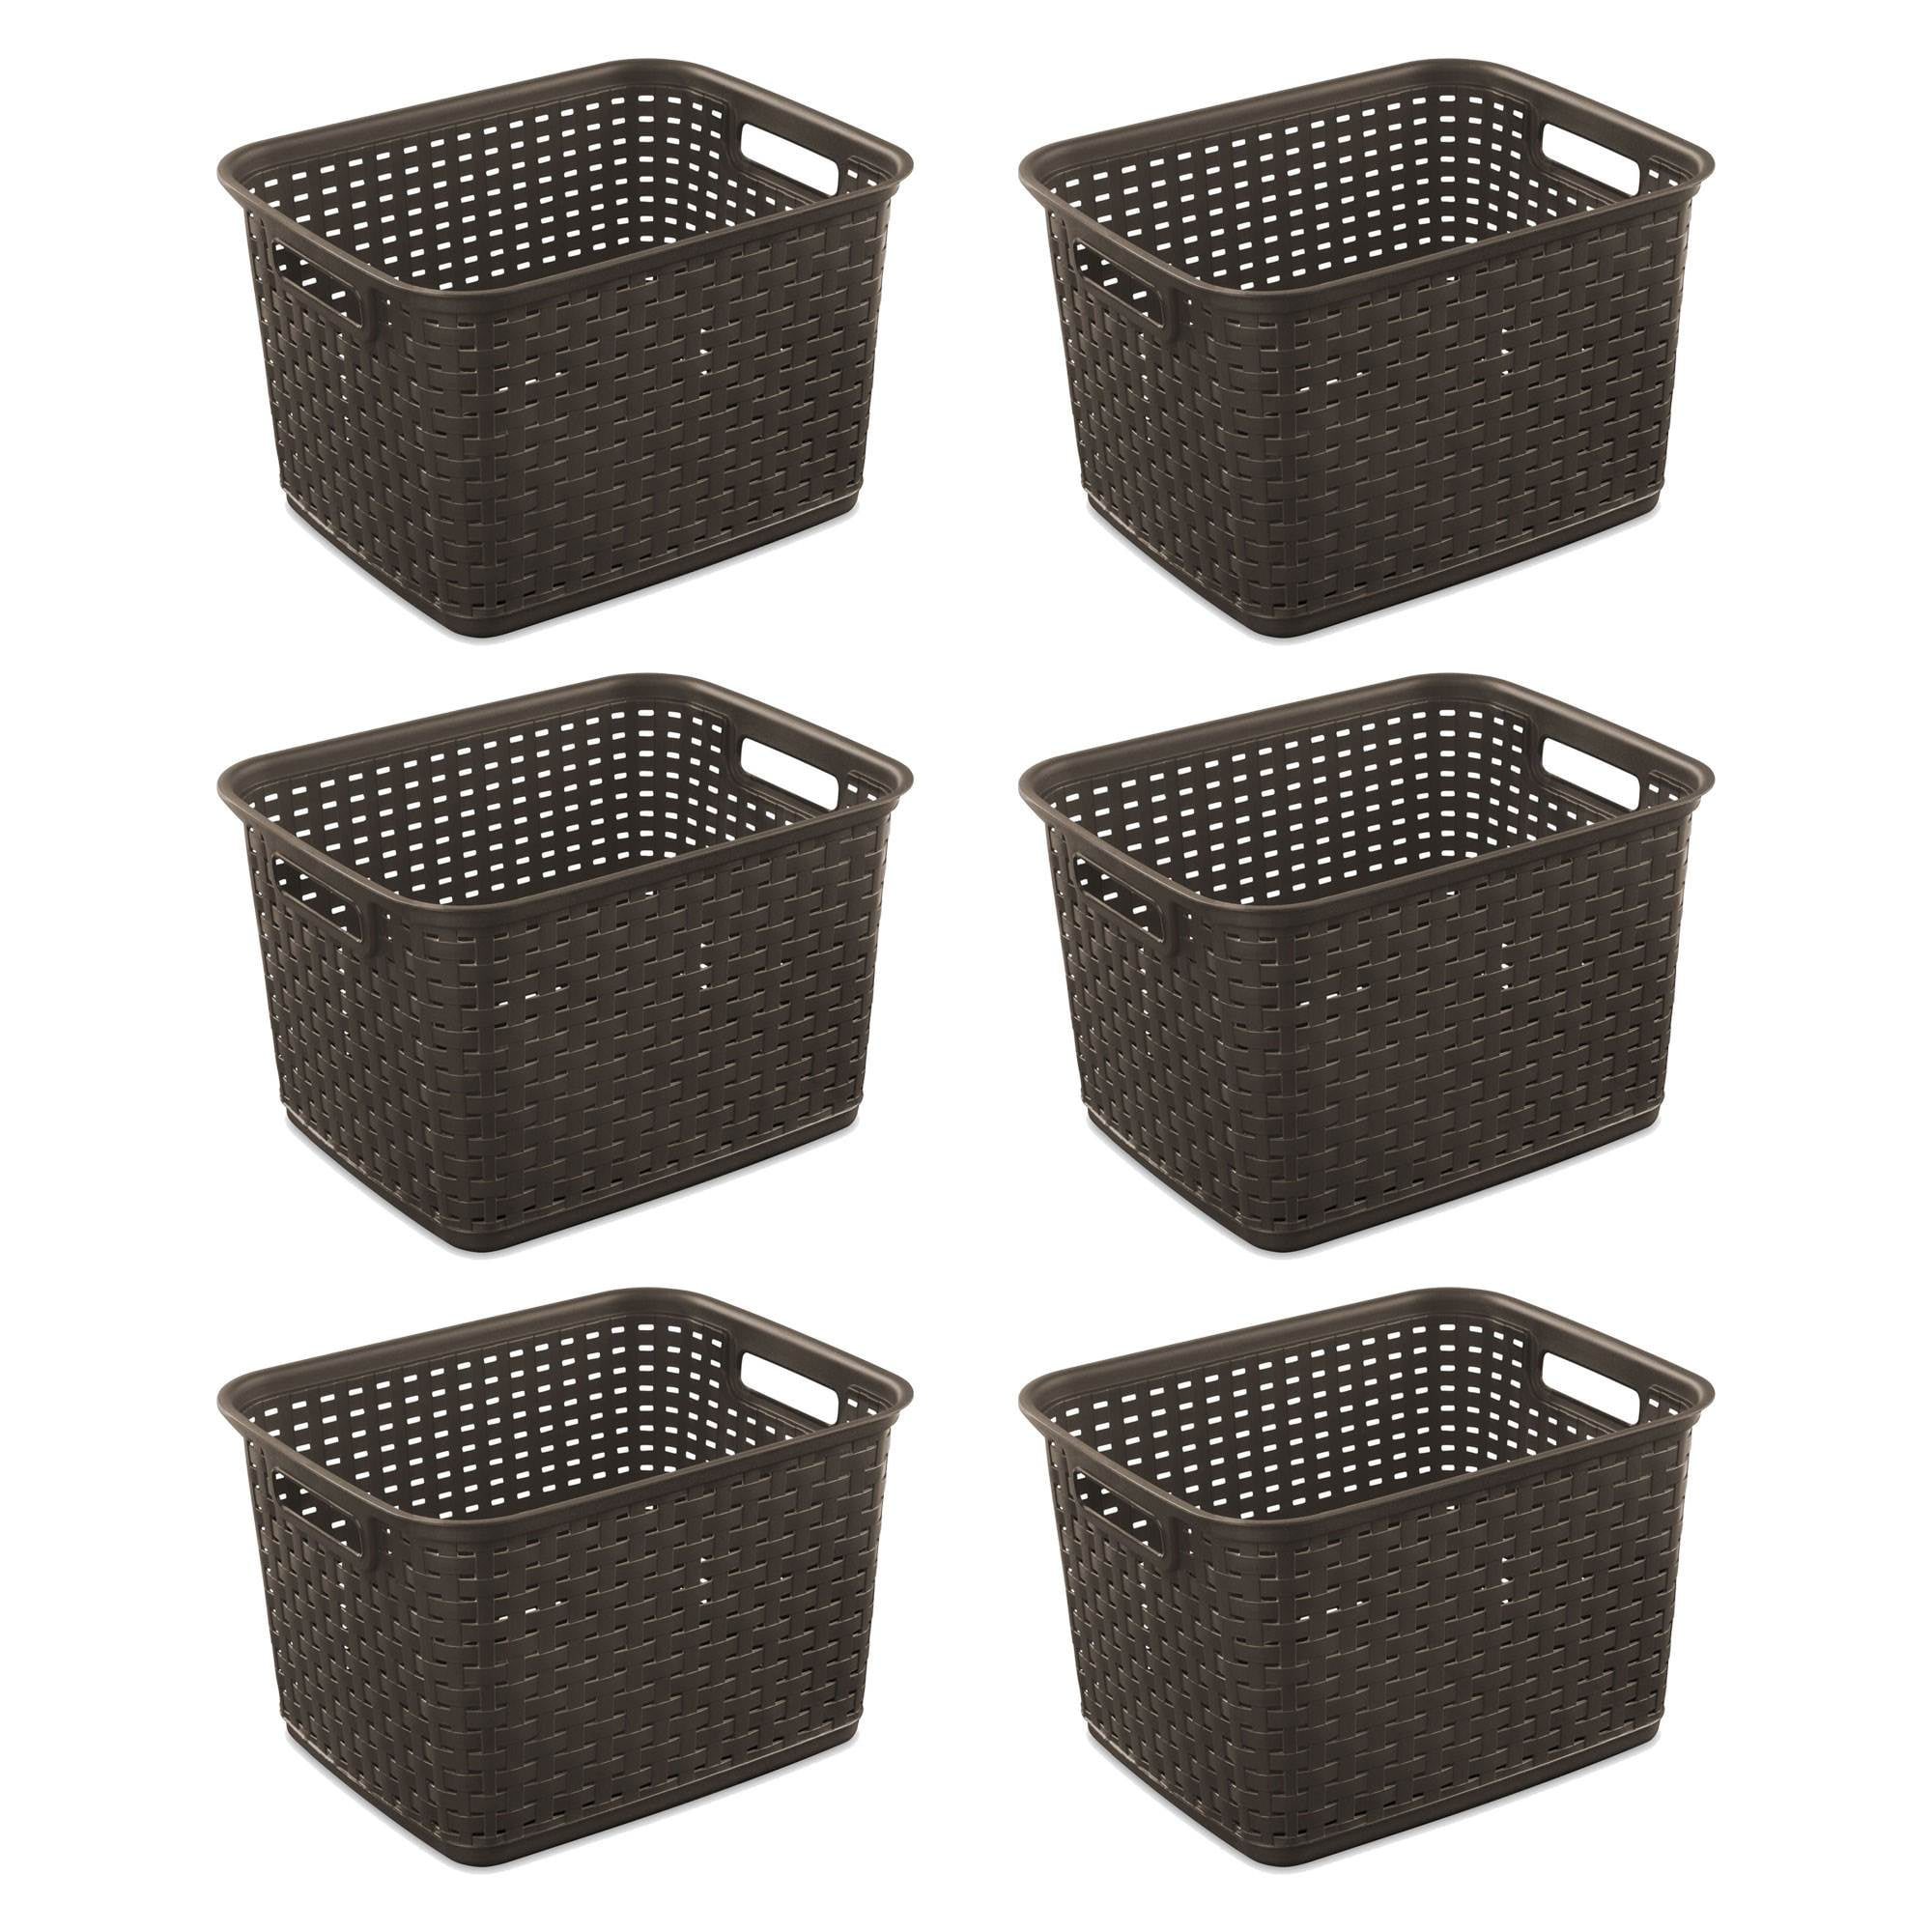 Sterilite 1273 Tall Weave Basket Storage Bin Wicker Look Plastic, Espresso  Brown 842372150040